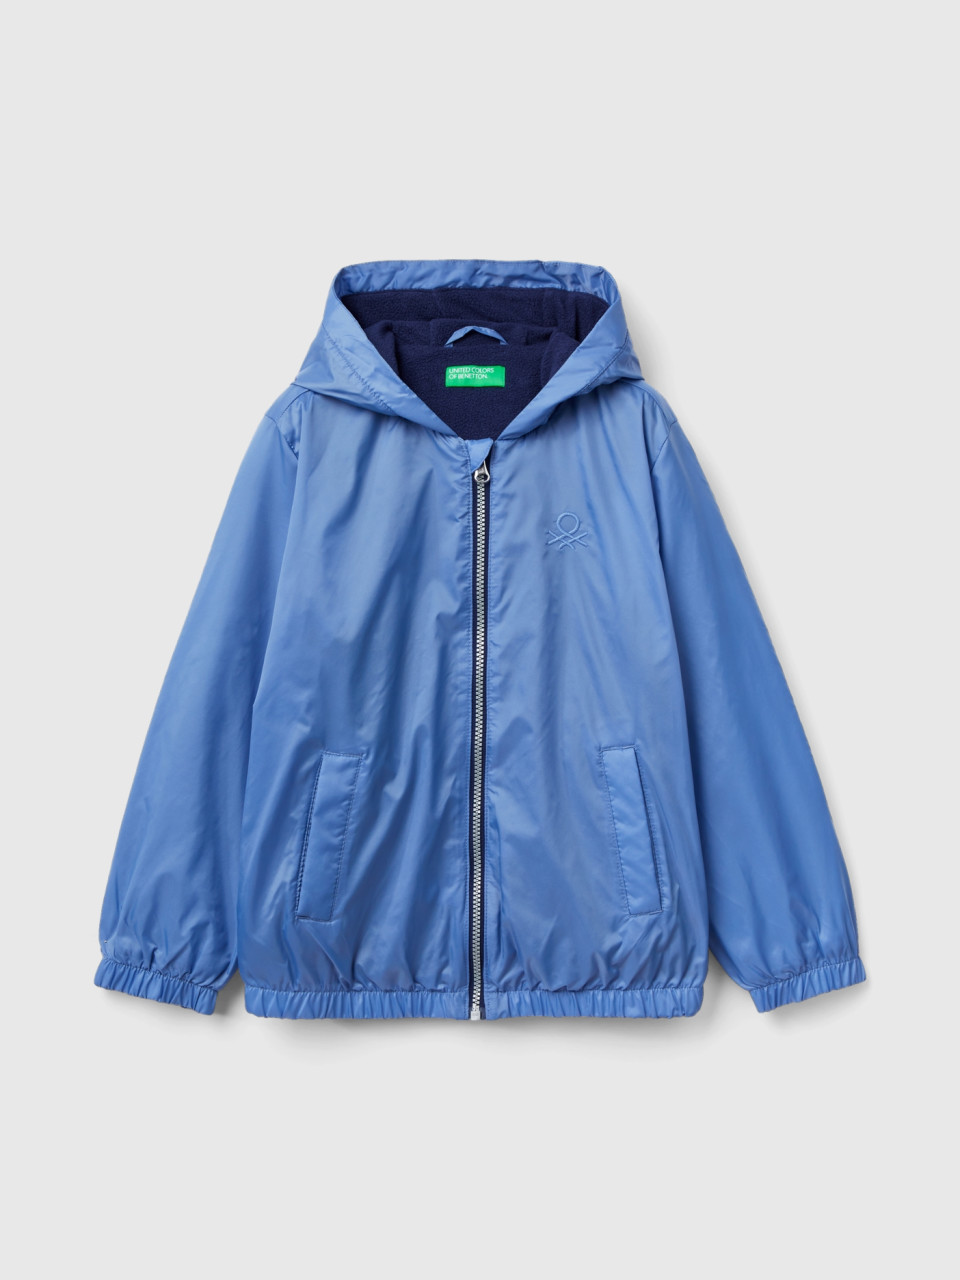 Benetton, Nylon Jacket With Zip And Hood, Light Blue, Kids